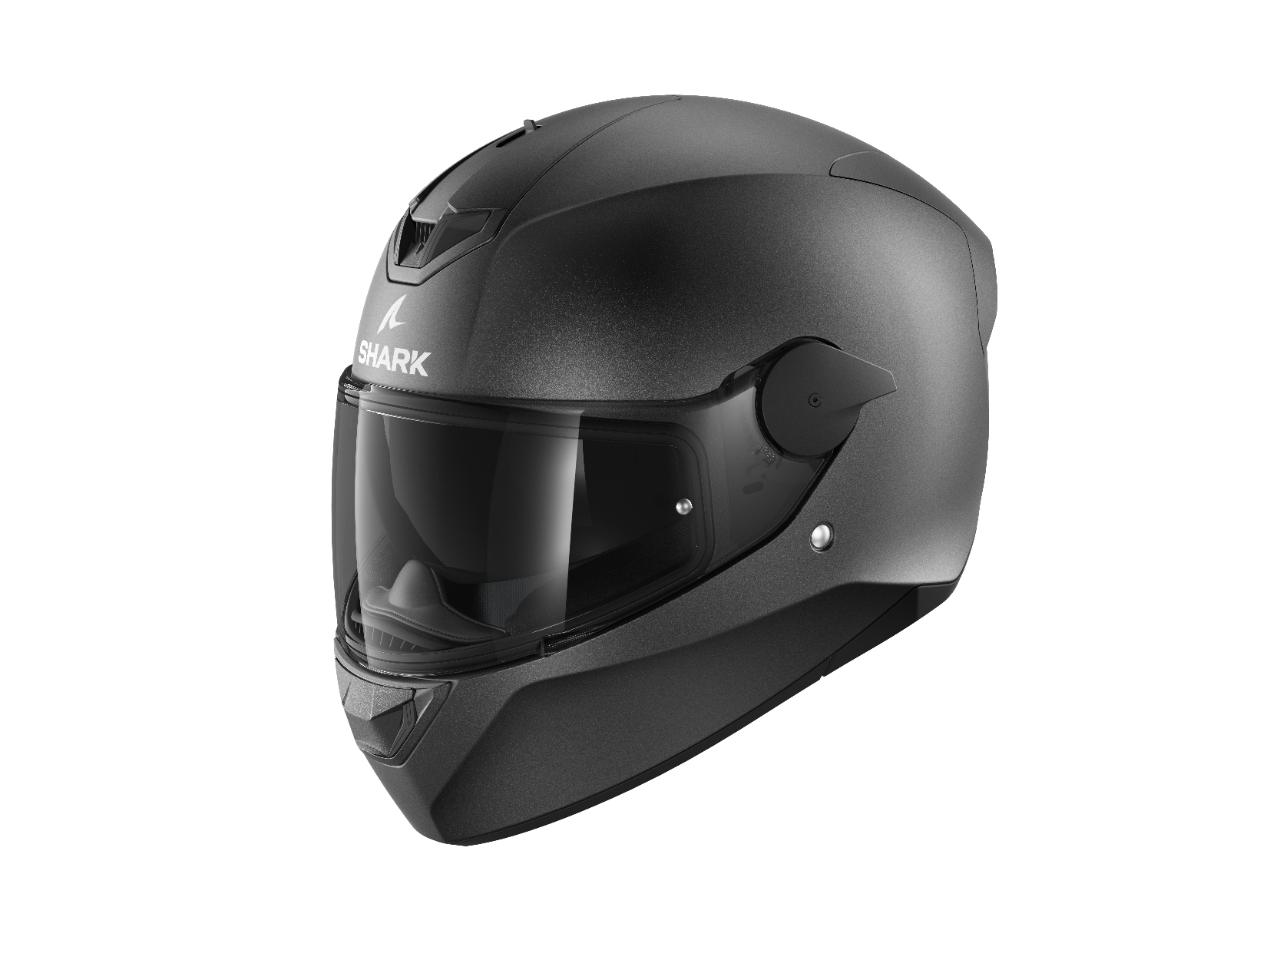 Casco integrale SHARK D-SKWALL 2 CADIUM nero grigio moto strada scooter